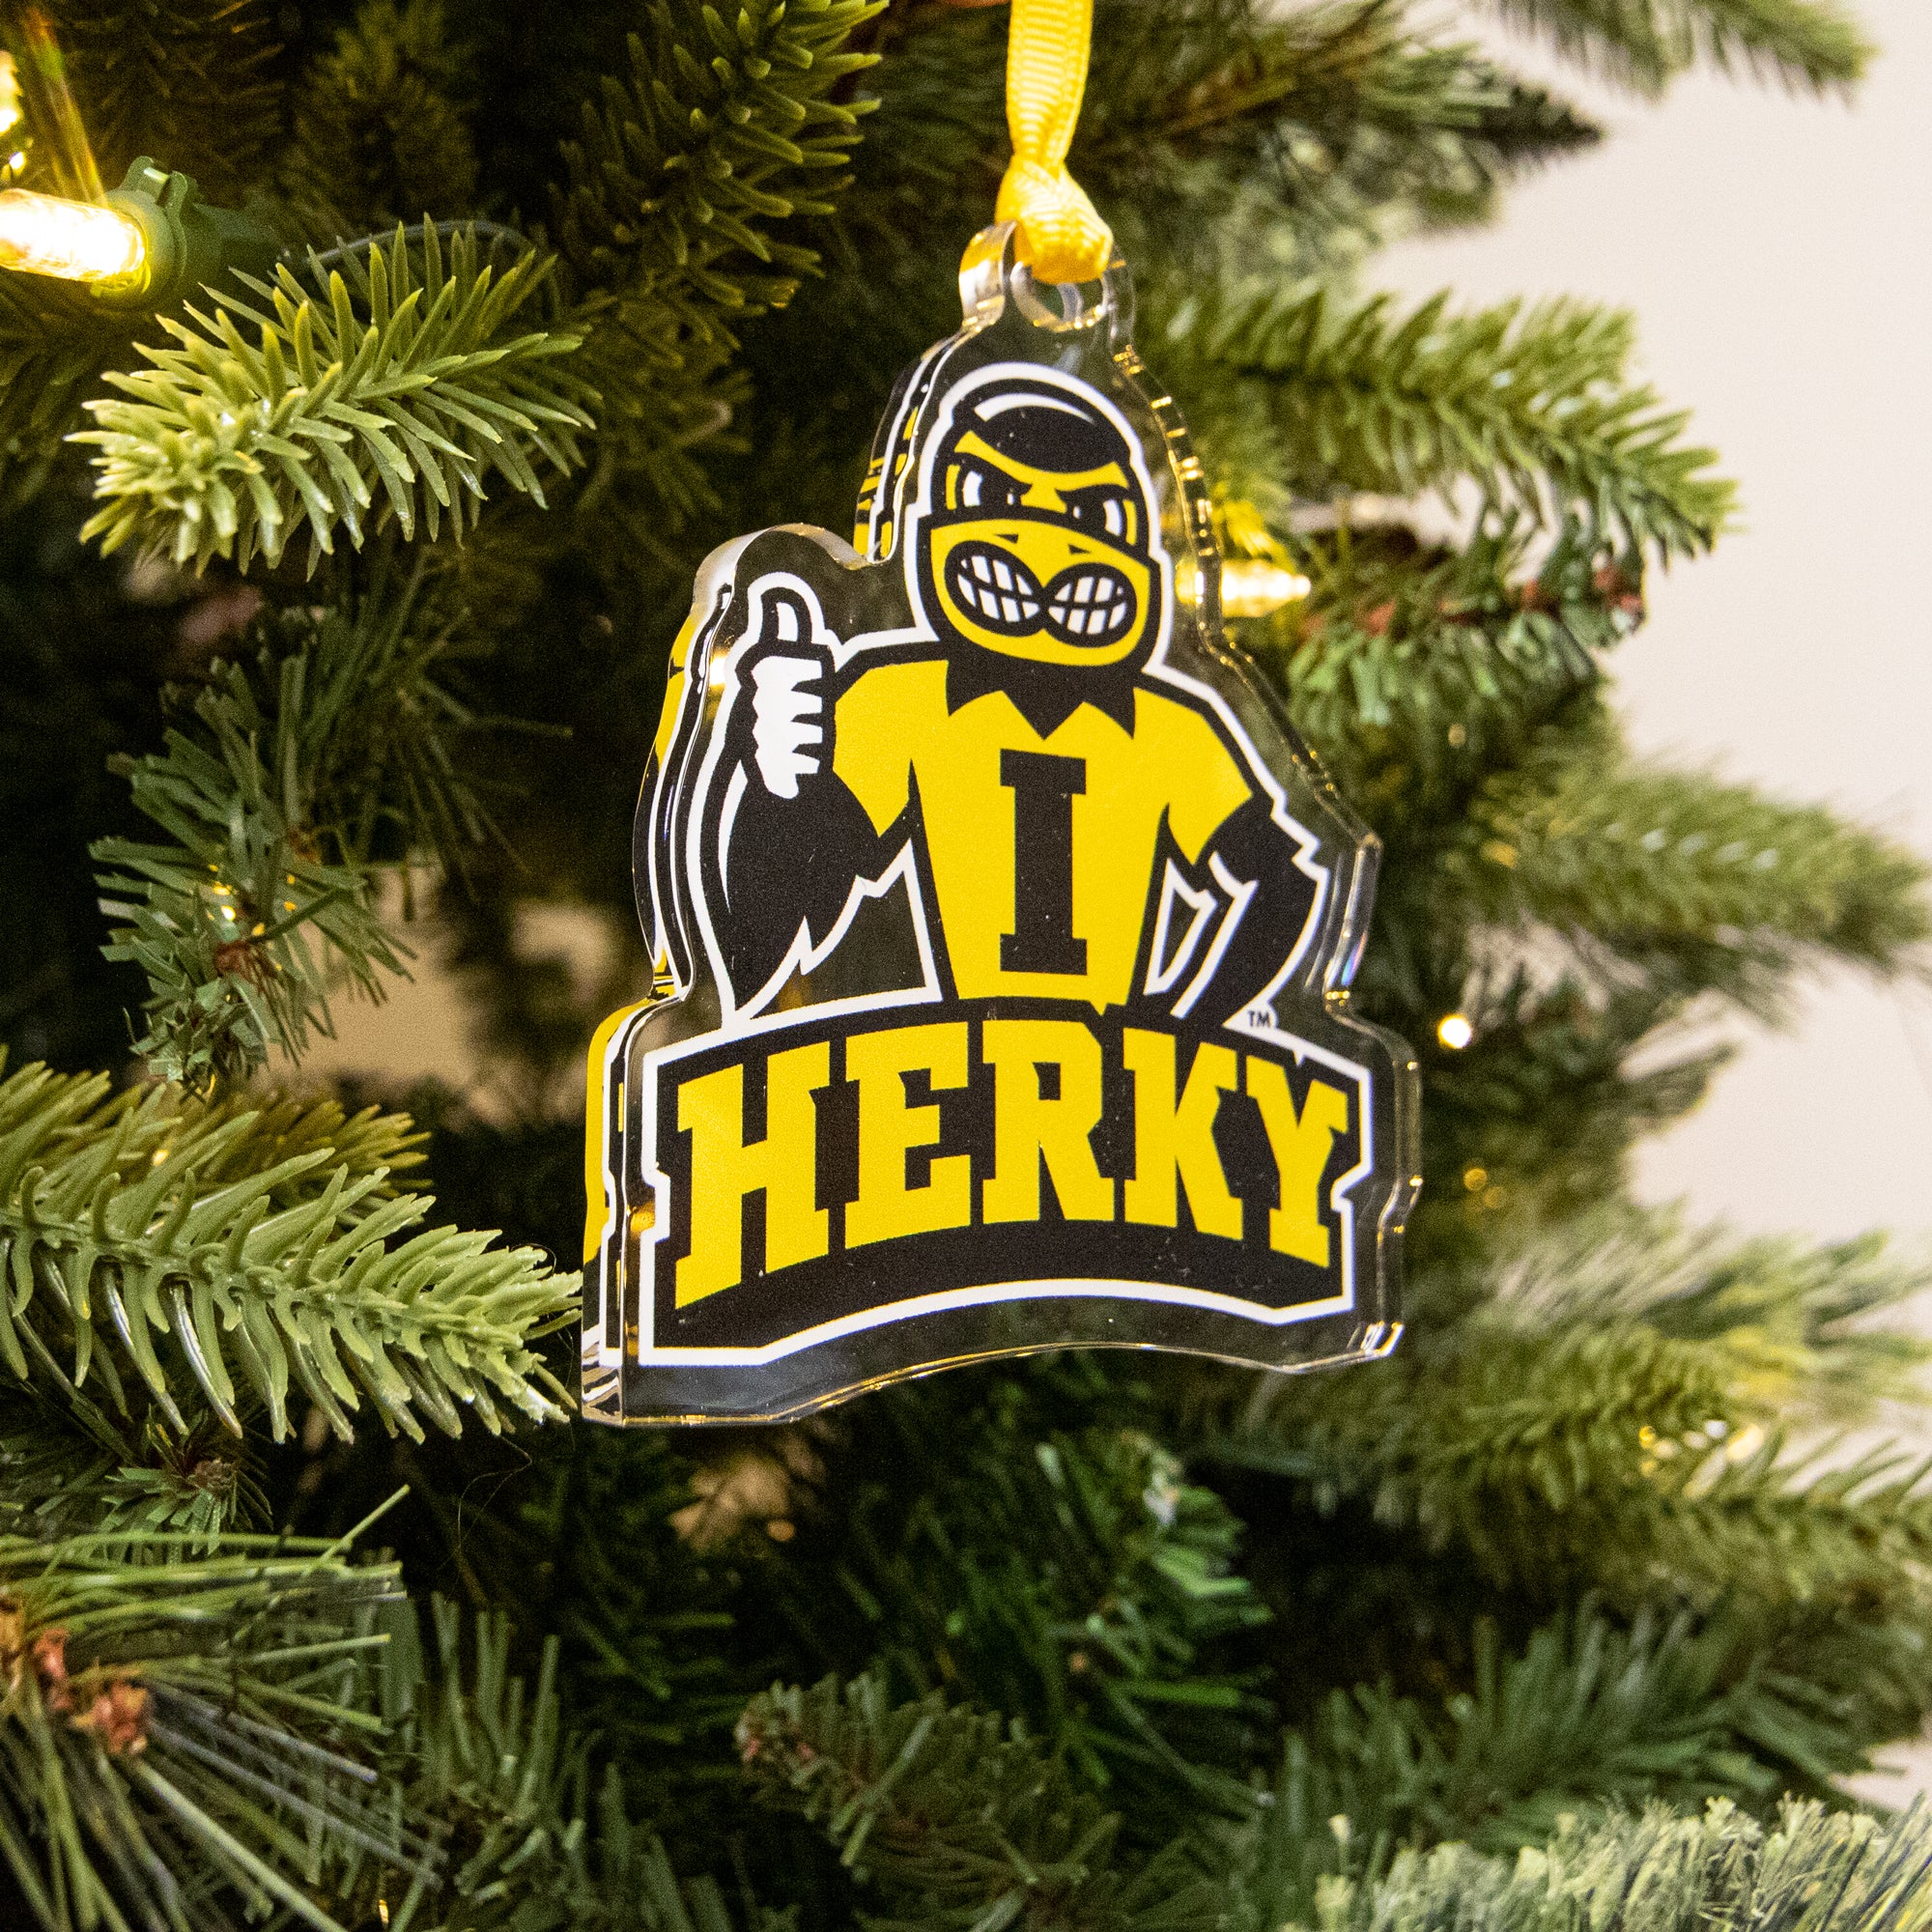 Iowa Hawkeyes - Herky Dimensional Ornament & Bag Tag